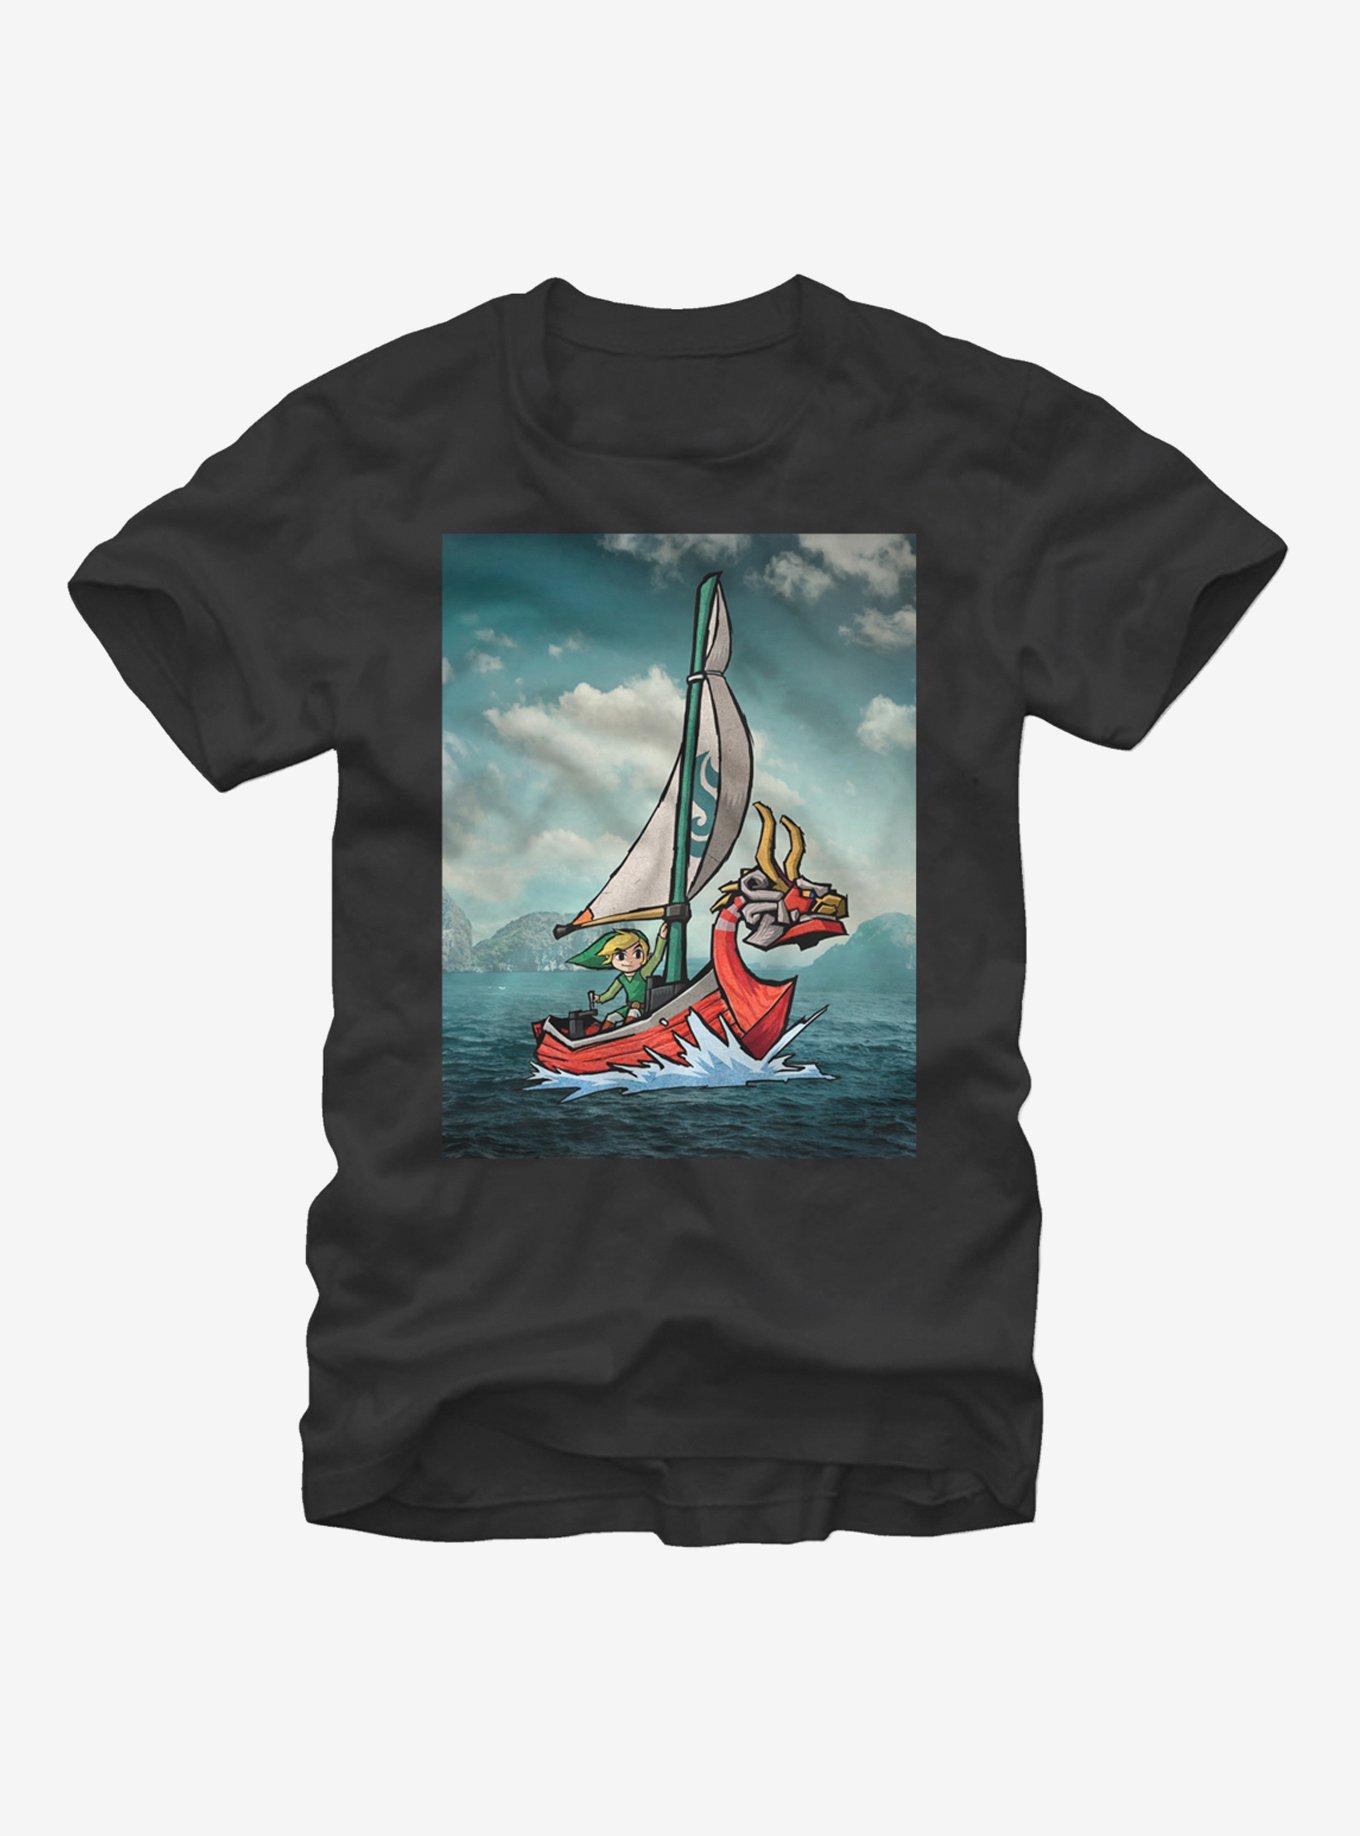 Nintendo Legend of Zelda Link Sailing T-Shirt